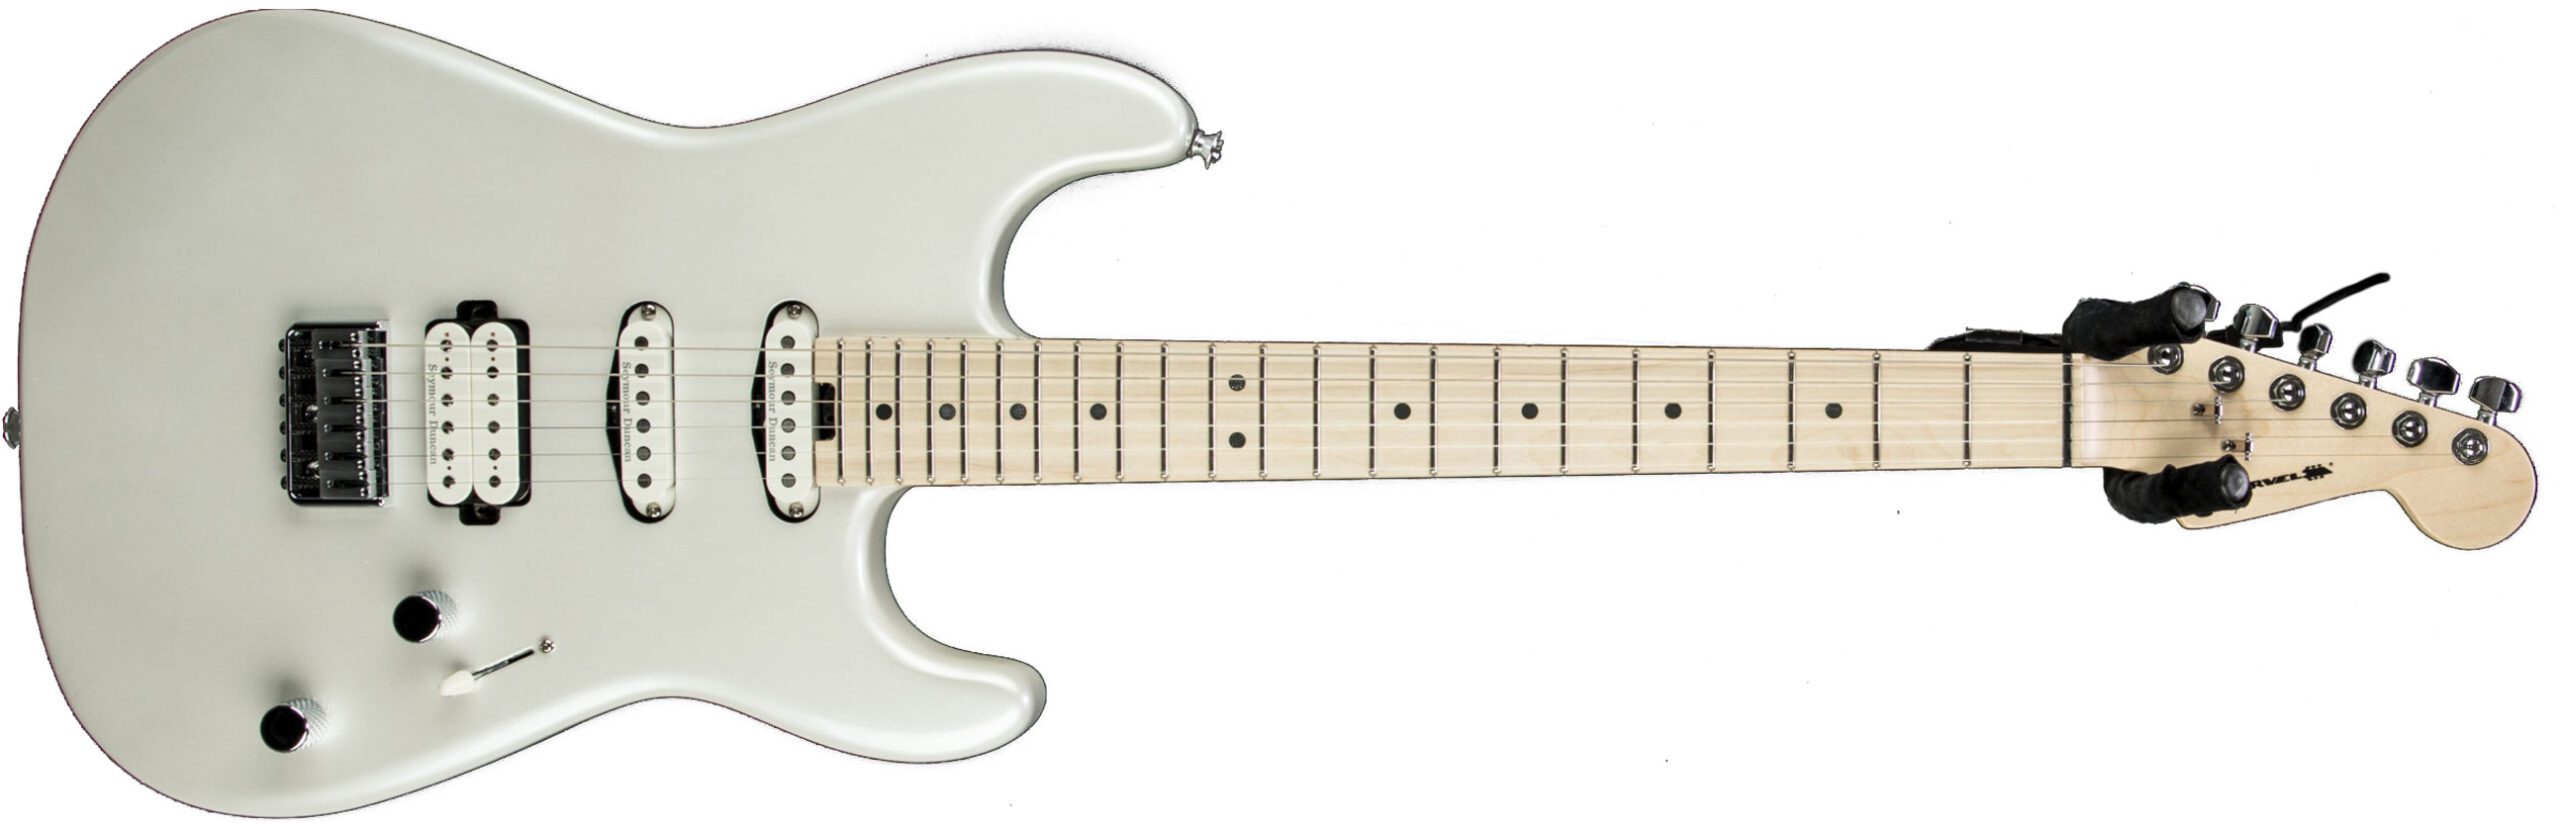 Charvel Pro-Mod San Dimas Electric Guitar on a white background